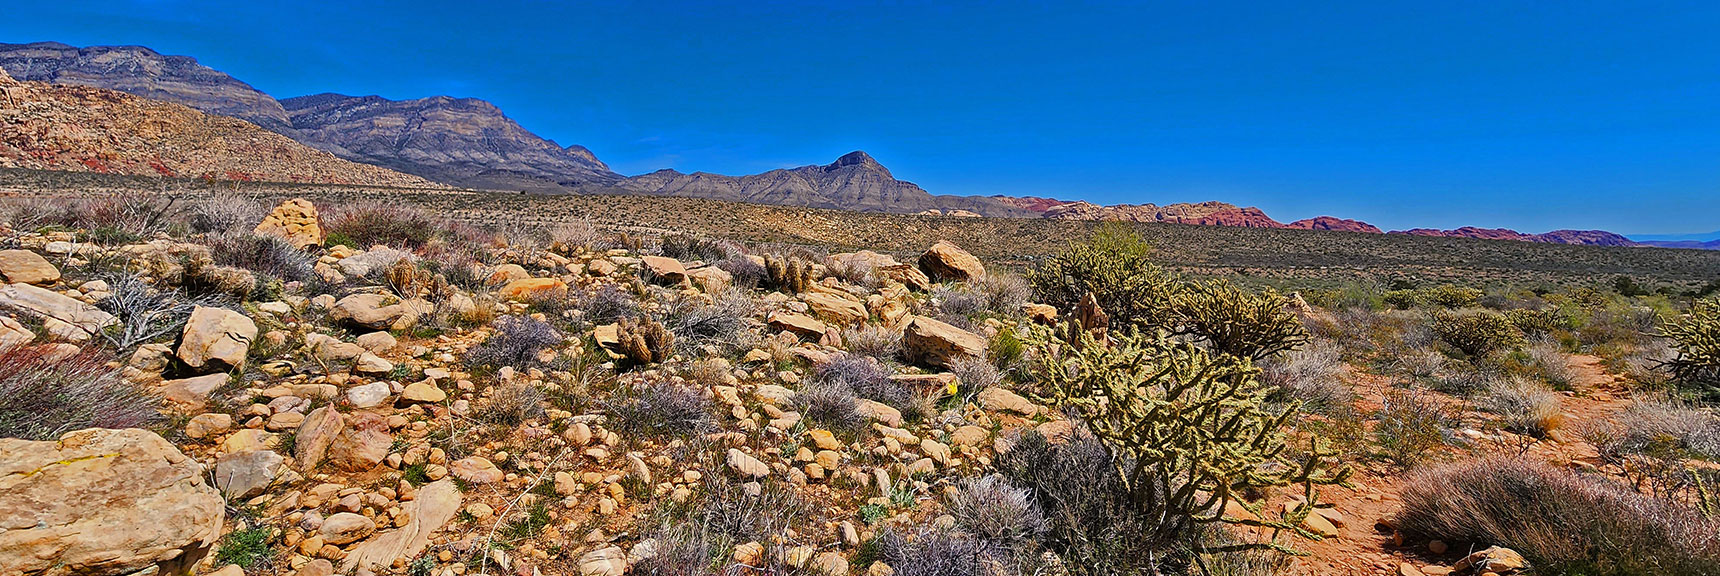 Jurassic Era Sandstone & Cacti Form the Surroundings | SMYC Trail | Red Rock Canyon National Conservation Area, Nevada | David Smith | LasVegasAreaTrails.com